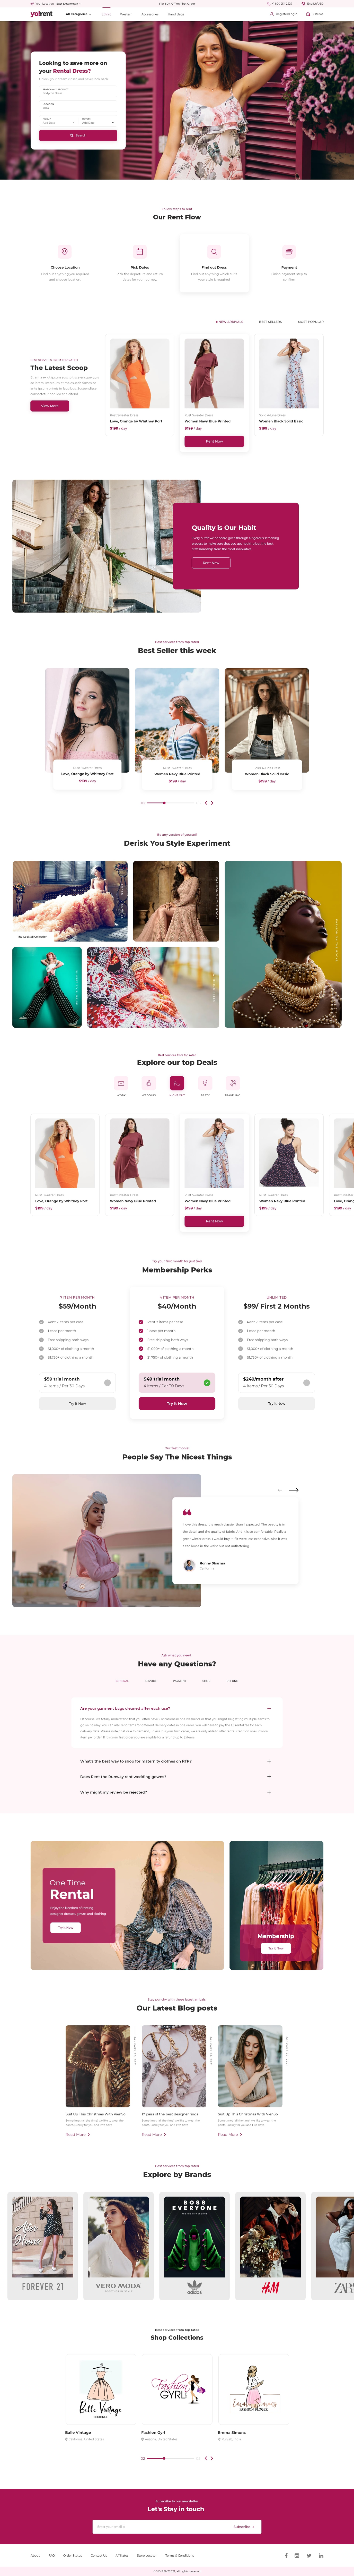 Fashion rental home page design